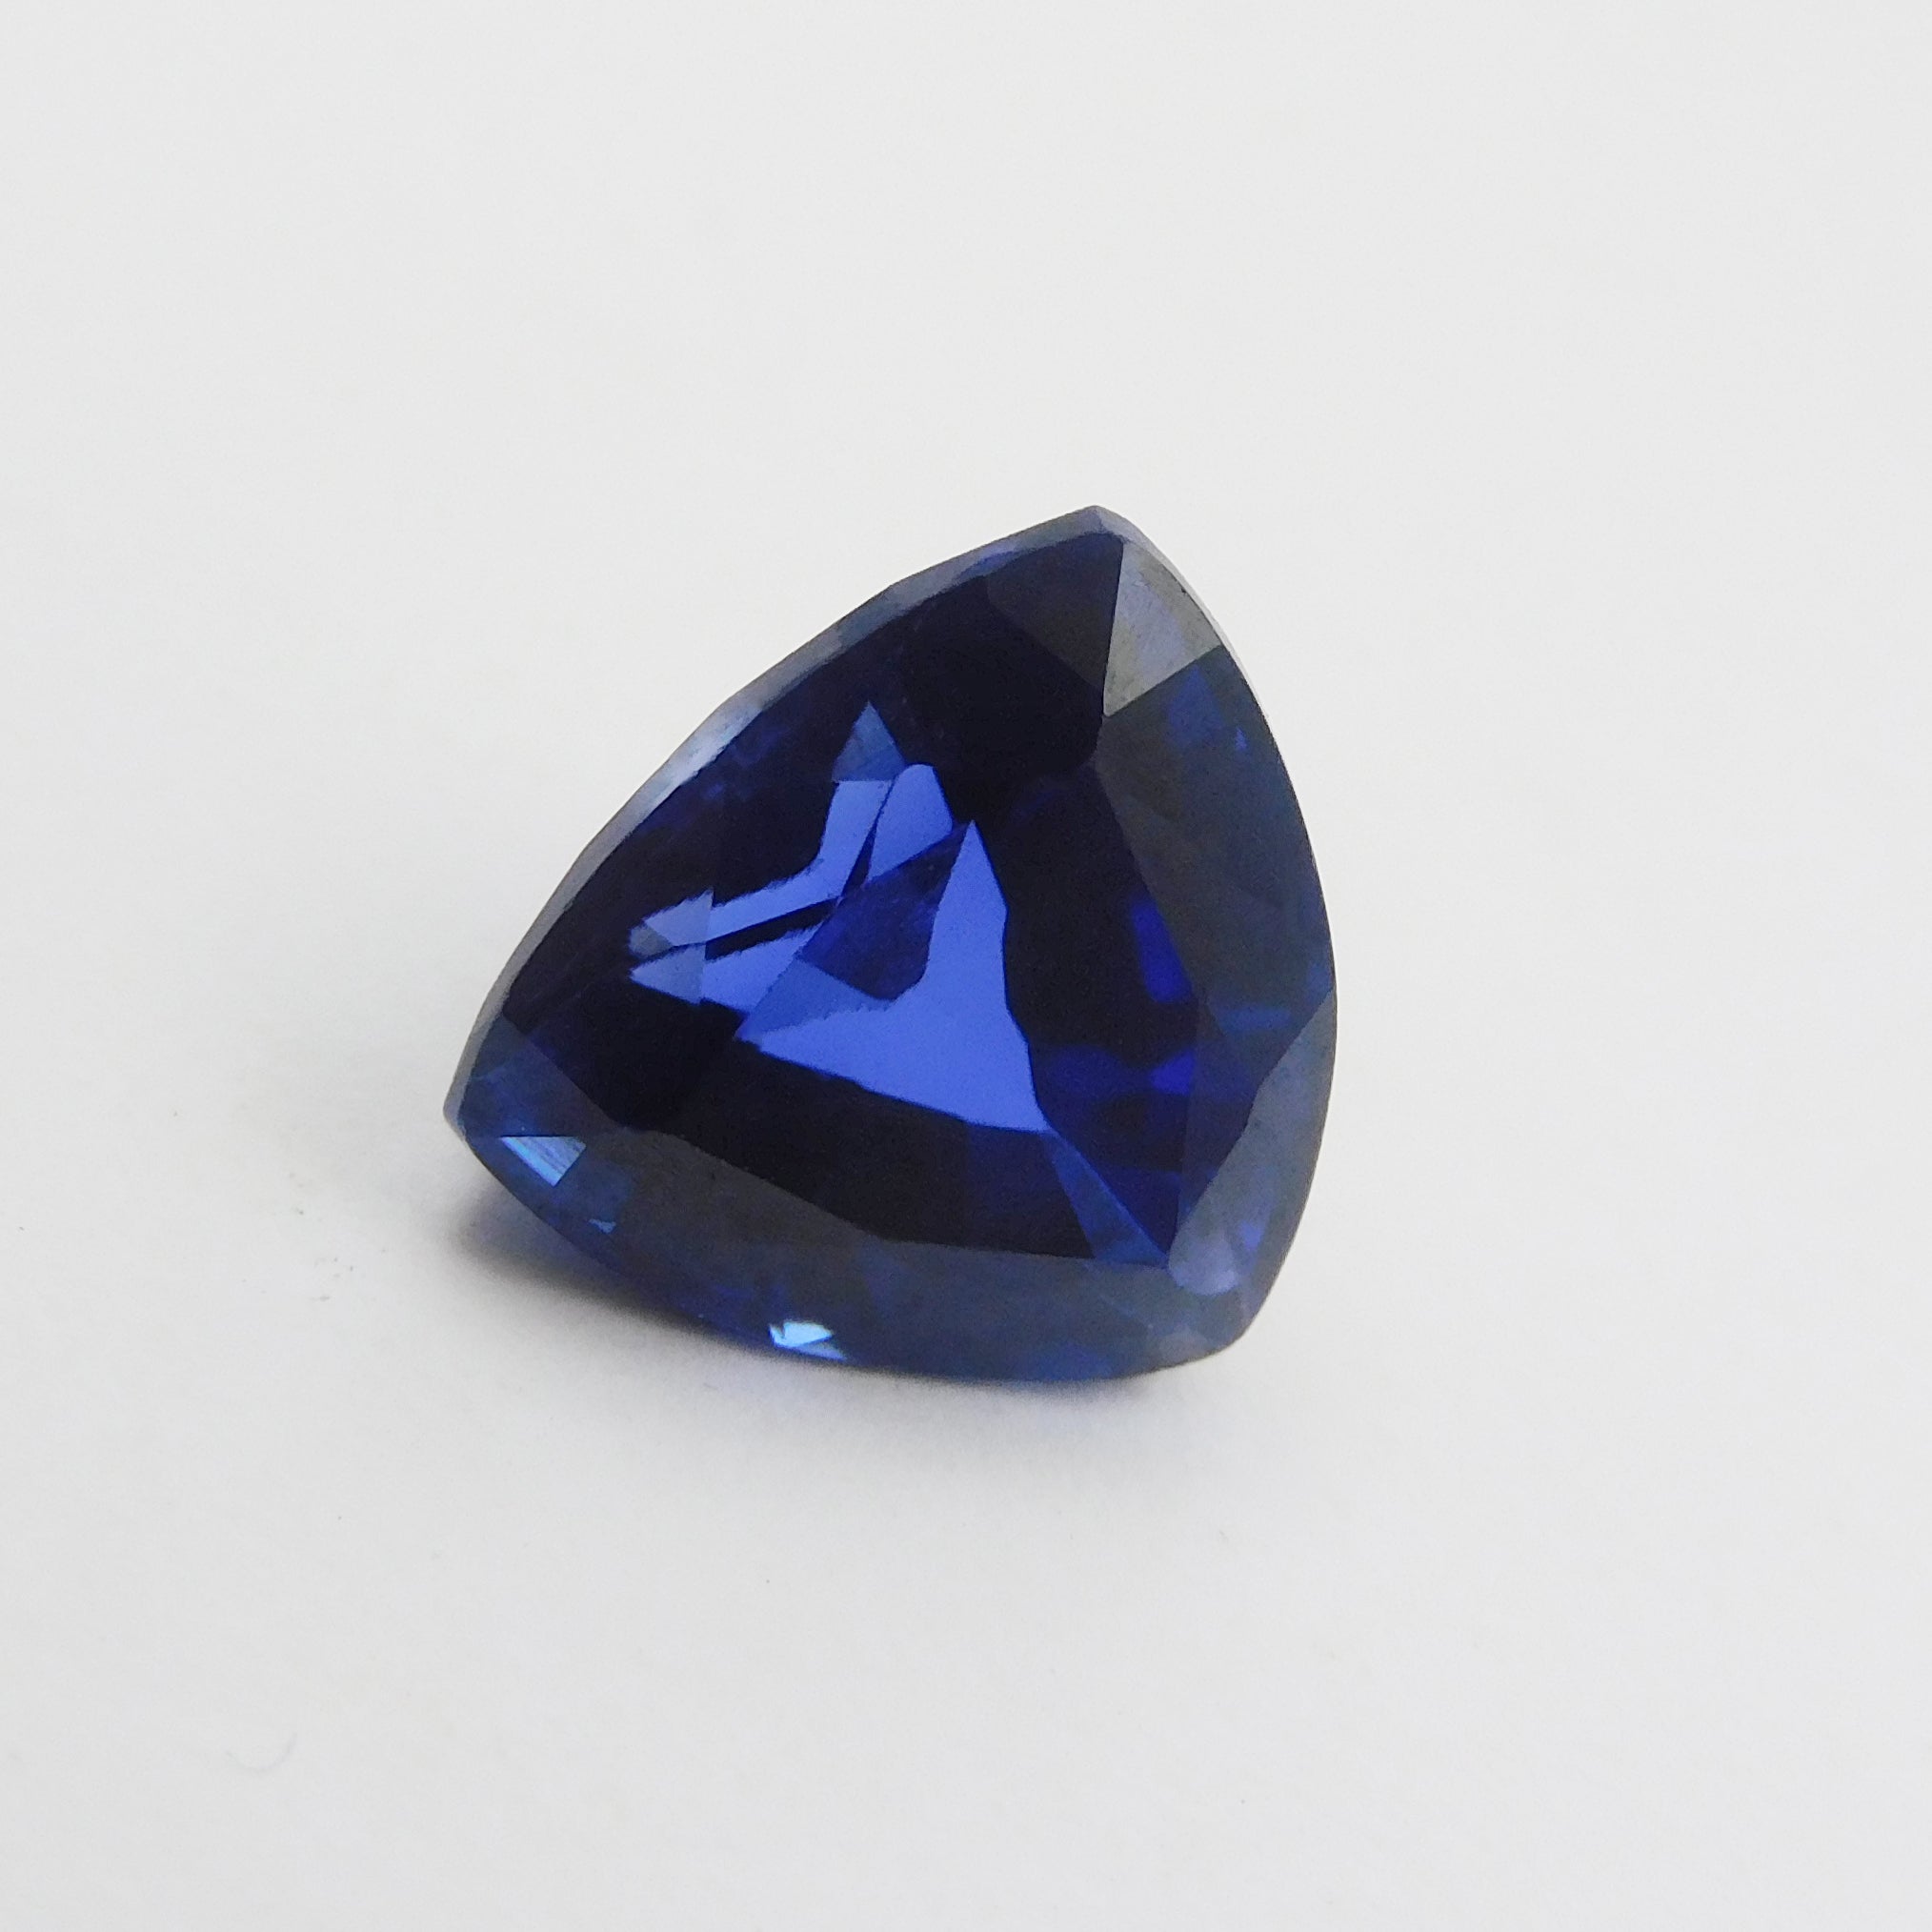 NATURAL Trillion Cut 10.54 Carat Dark BLUE Tanzanite CERTIFIED Ring Size Loose Gemstone | Tanzania's Best Beautiful Gemstone | Best For Protection